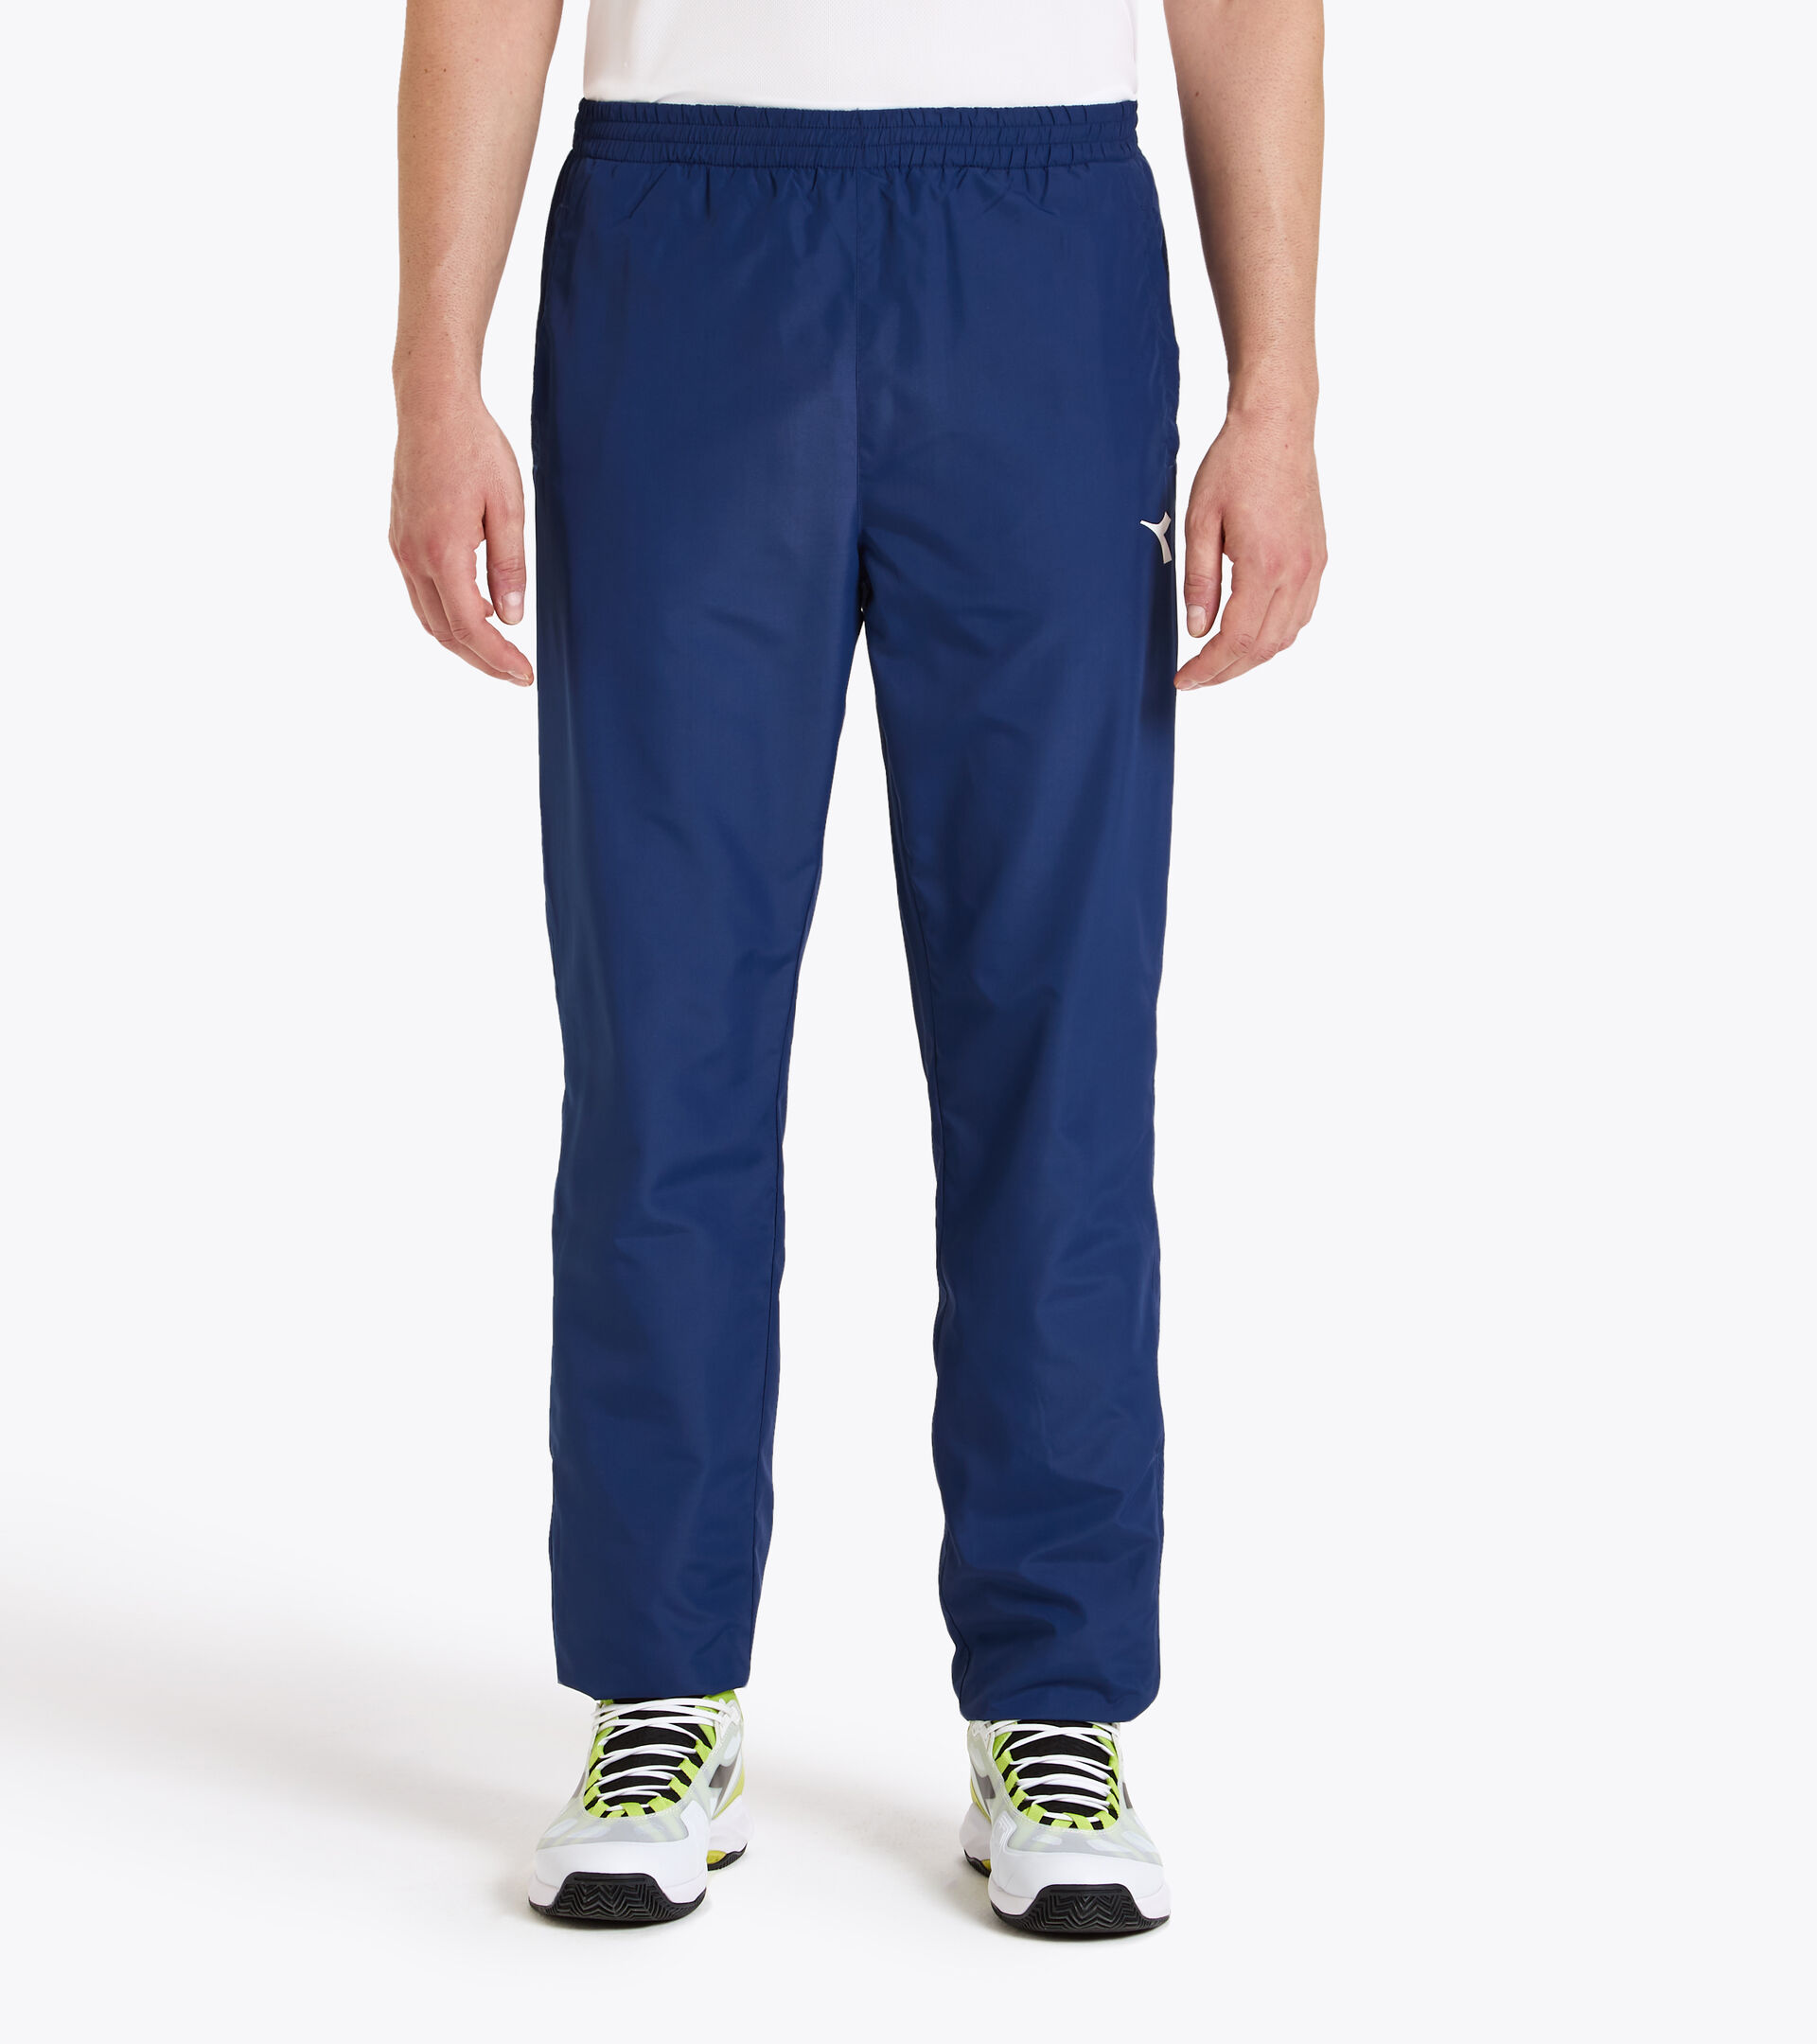 PANTS Tennis trousers - Men - Diadora Online Store US